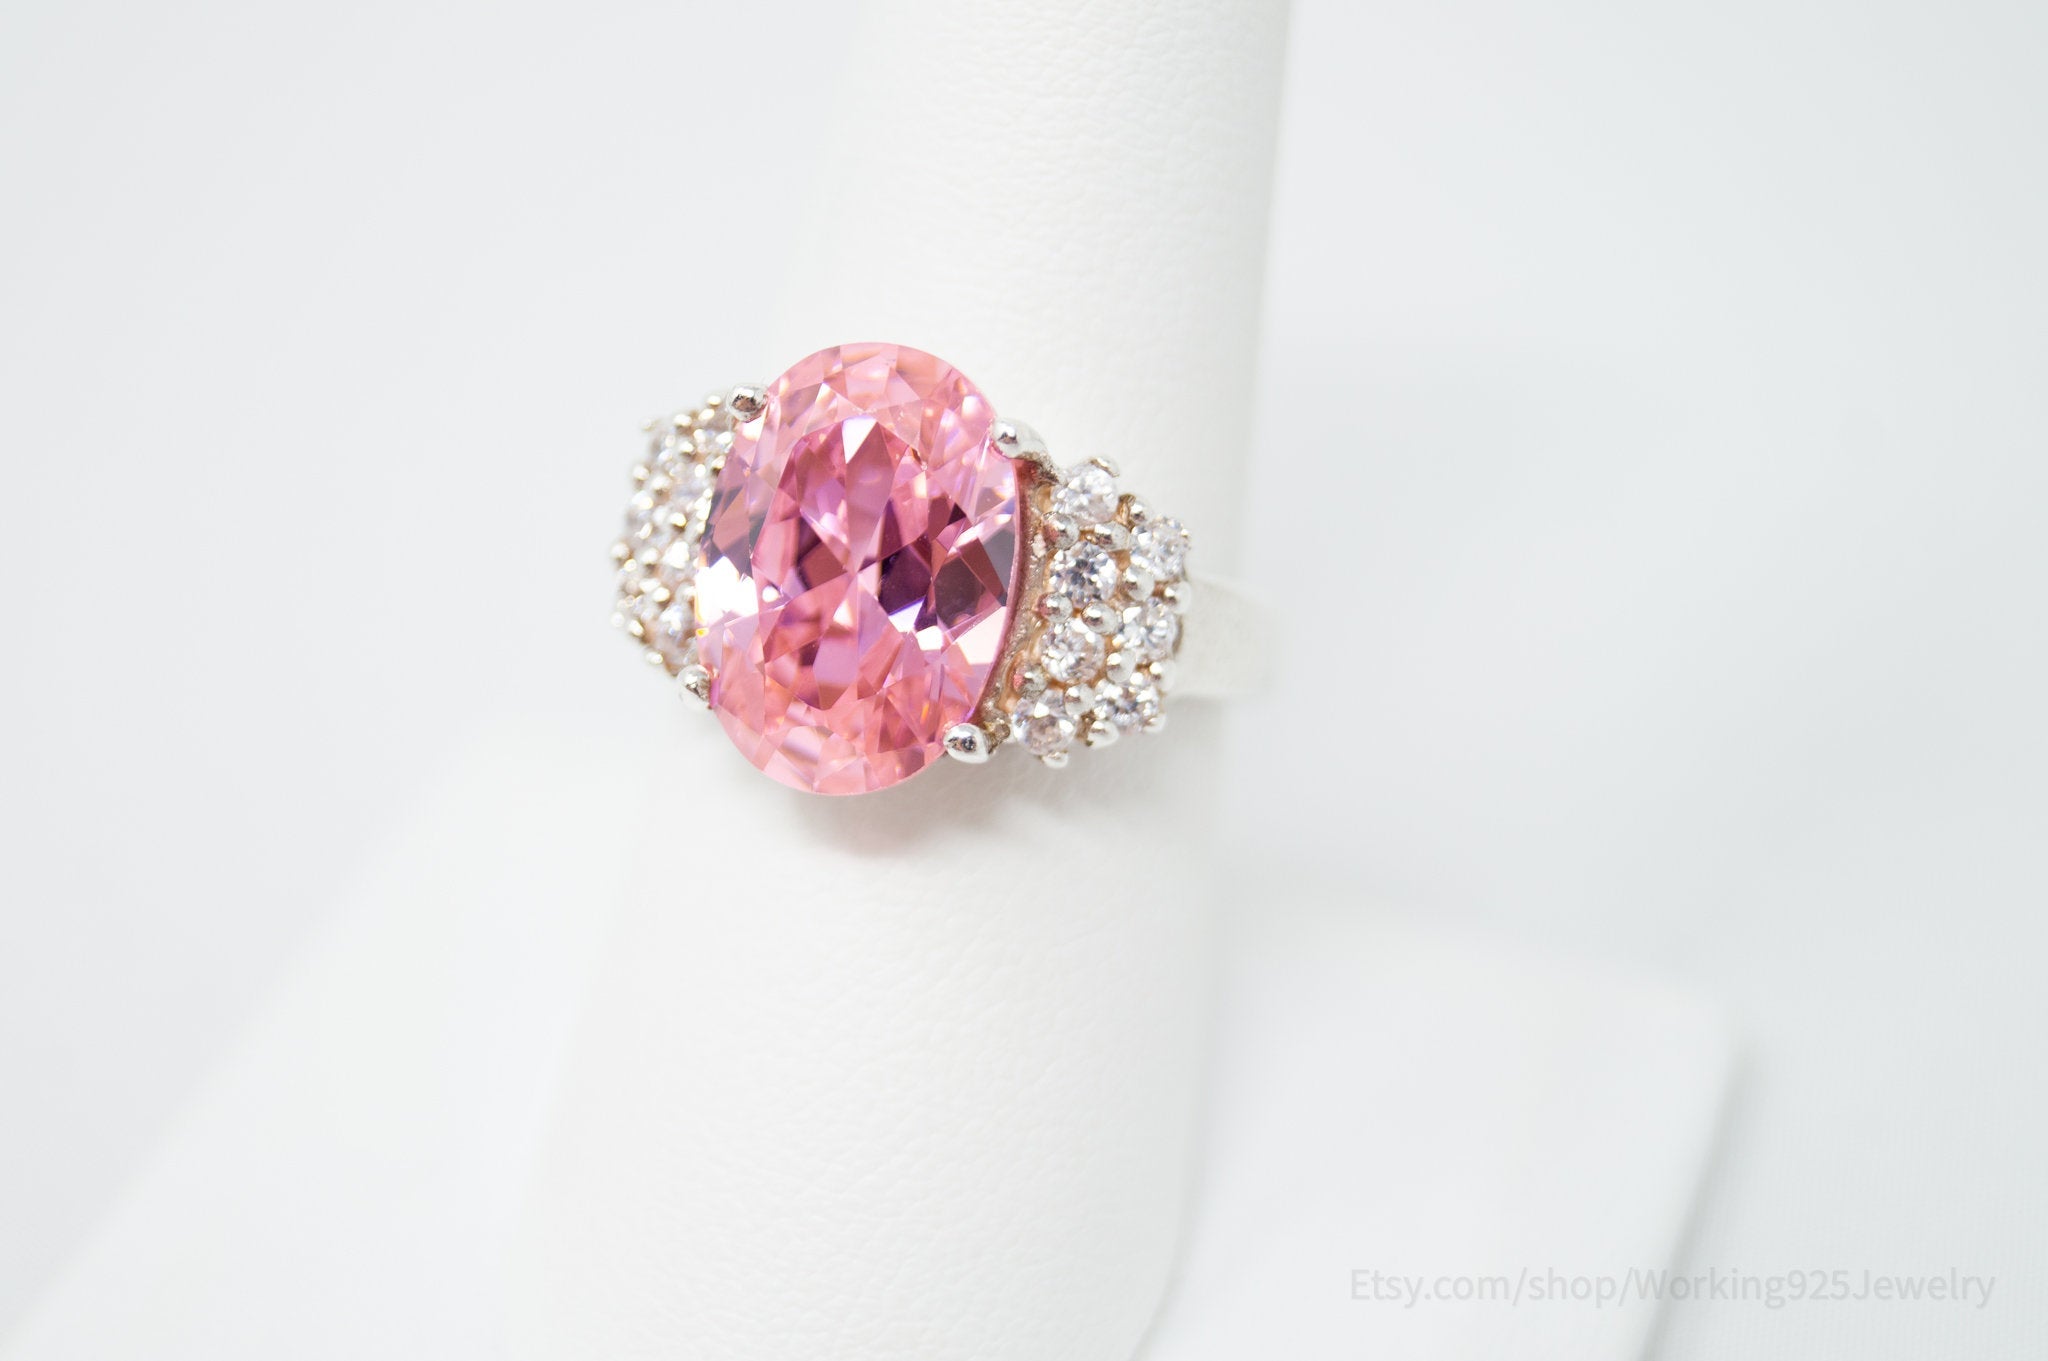 Vintage Art Deco Style Pink Topaz Cz Statement Ring Sterling Silver - Size 7.5